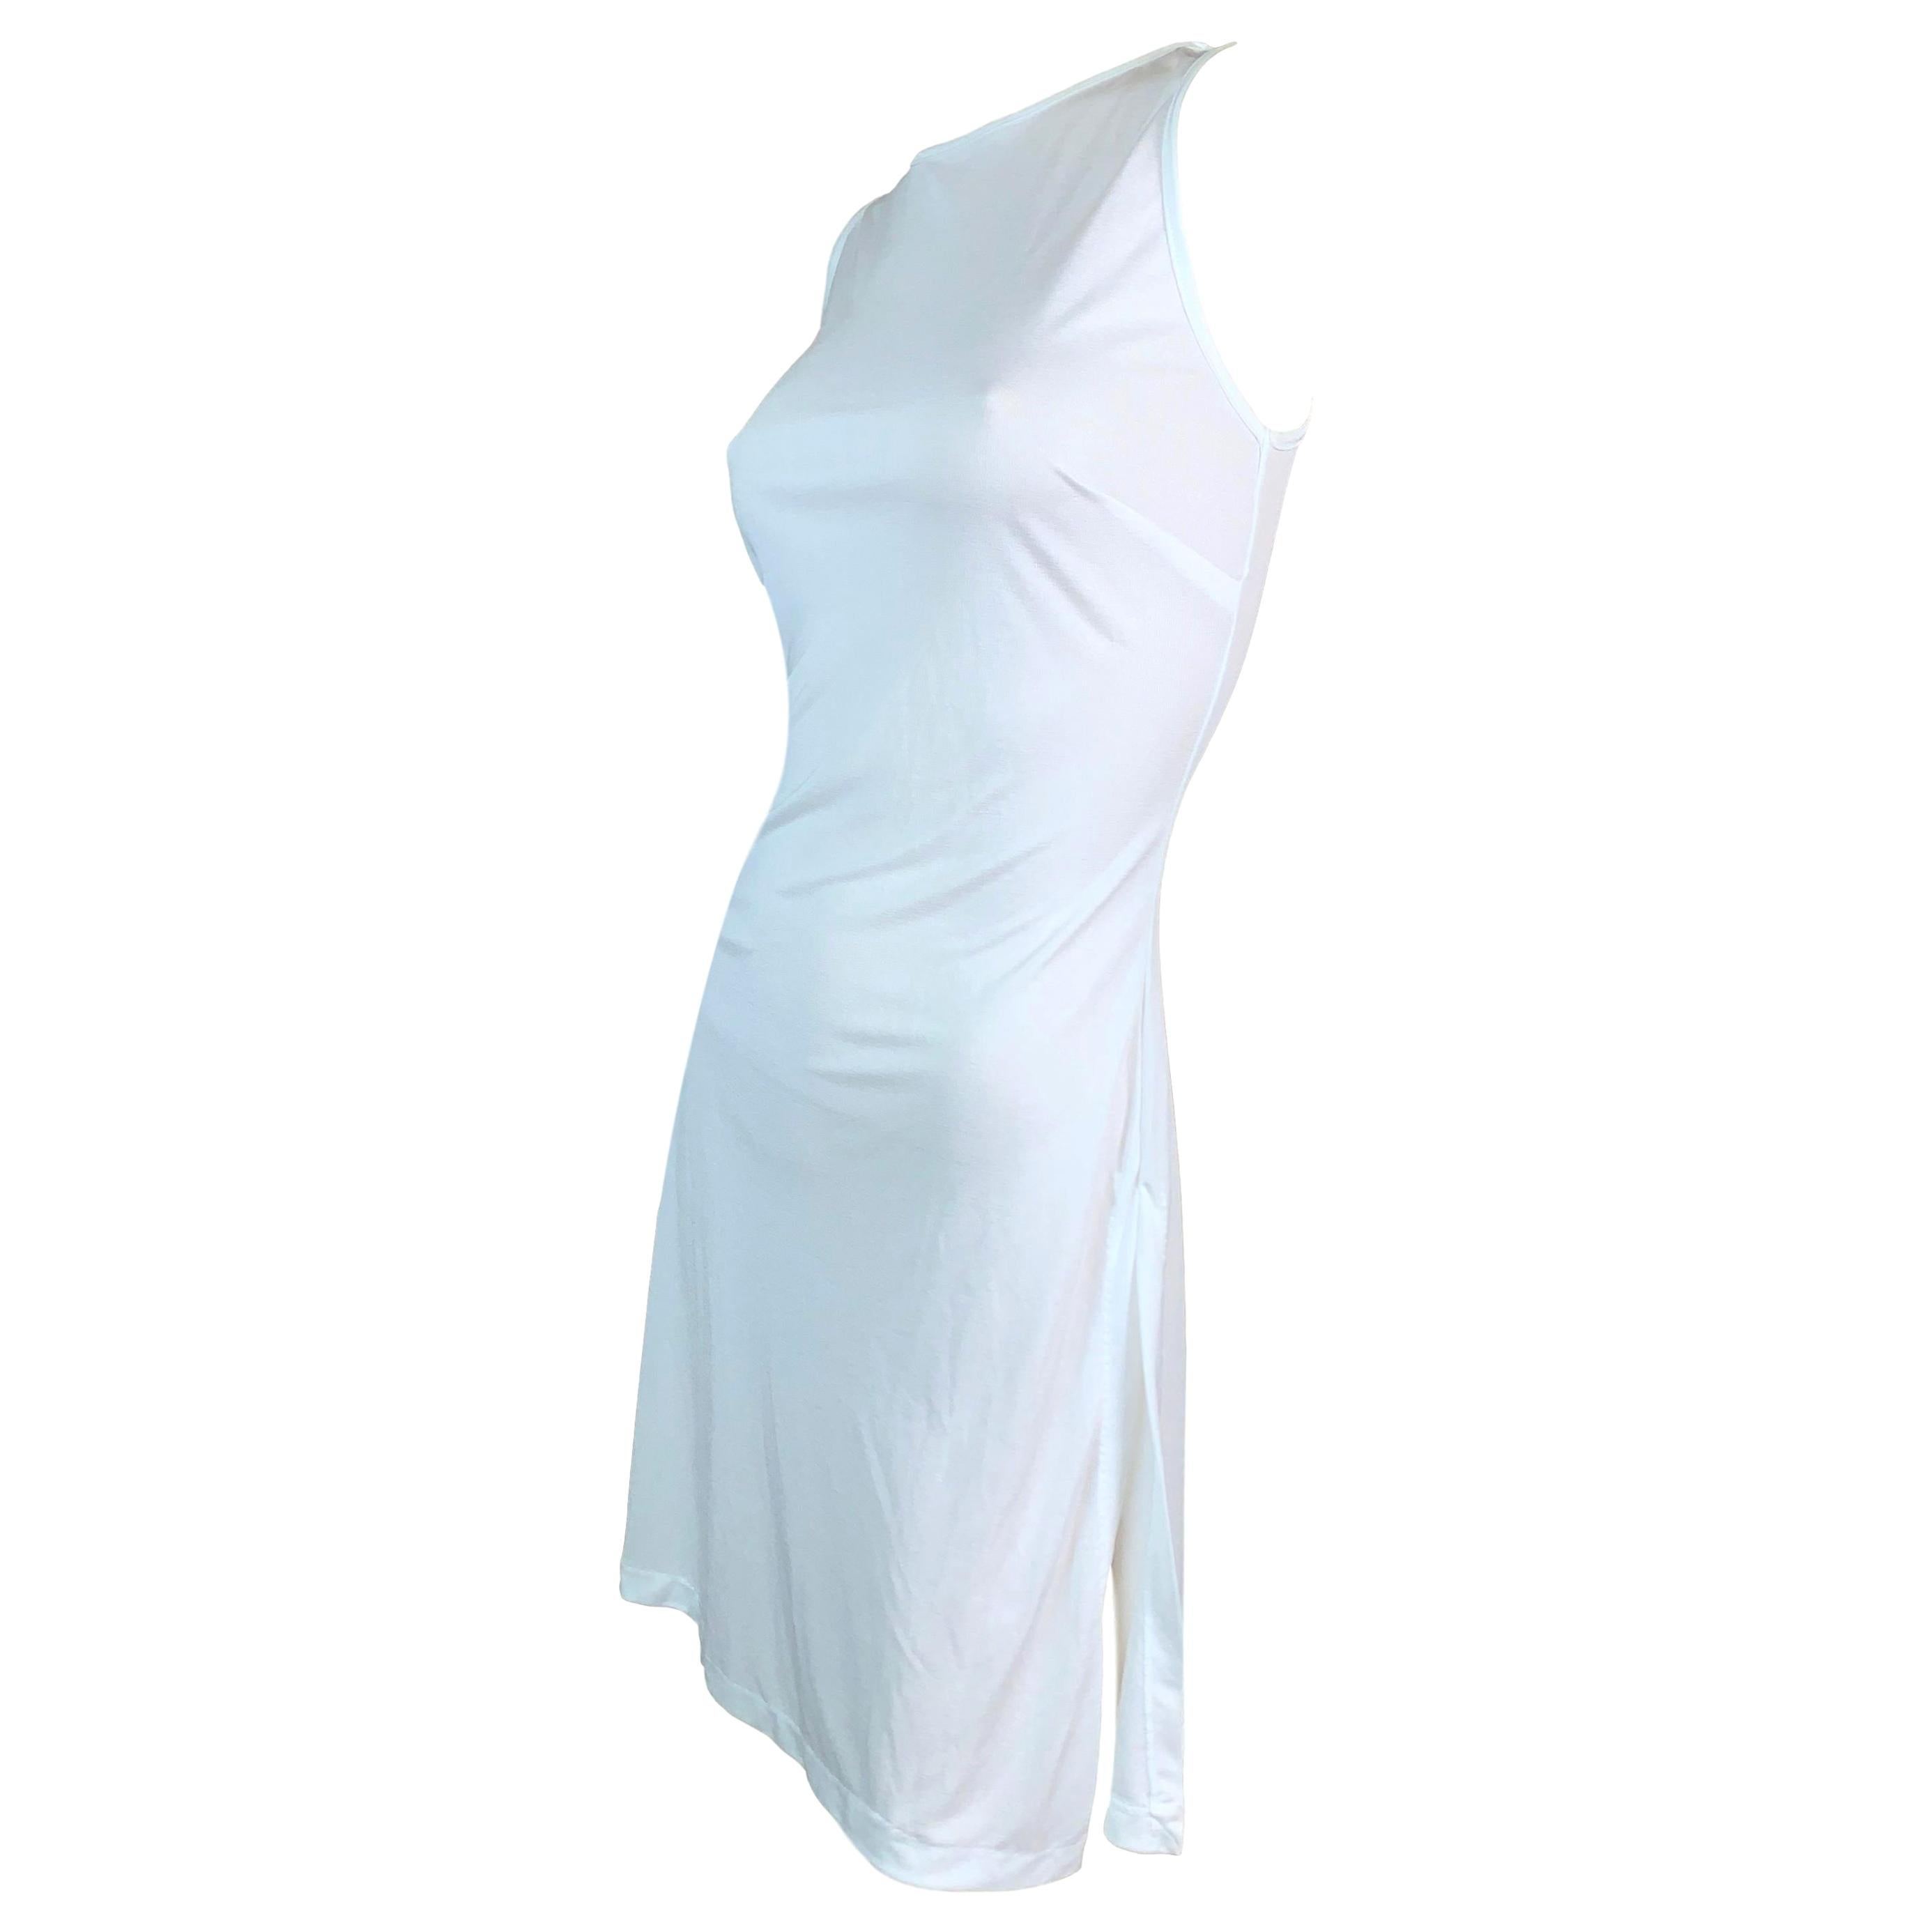 NWT 1990's Dolce & Gabbana Semi-Sheer White Slinky Side Slits Dress